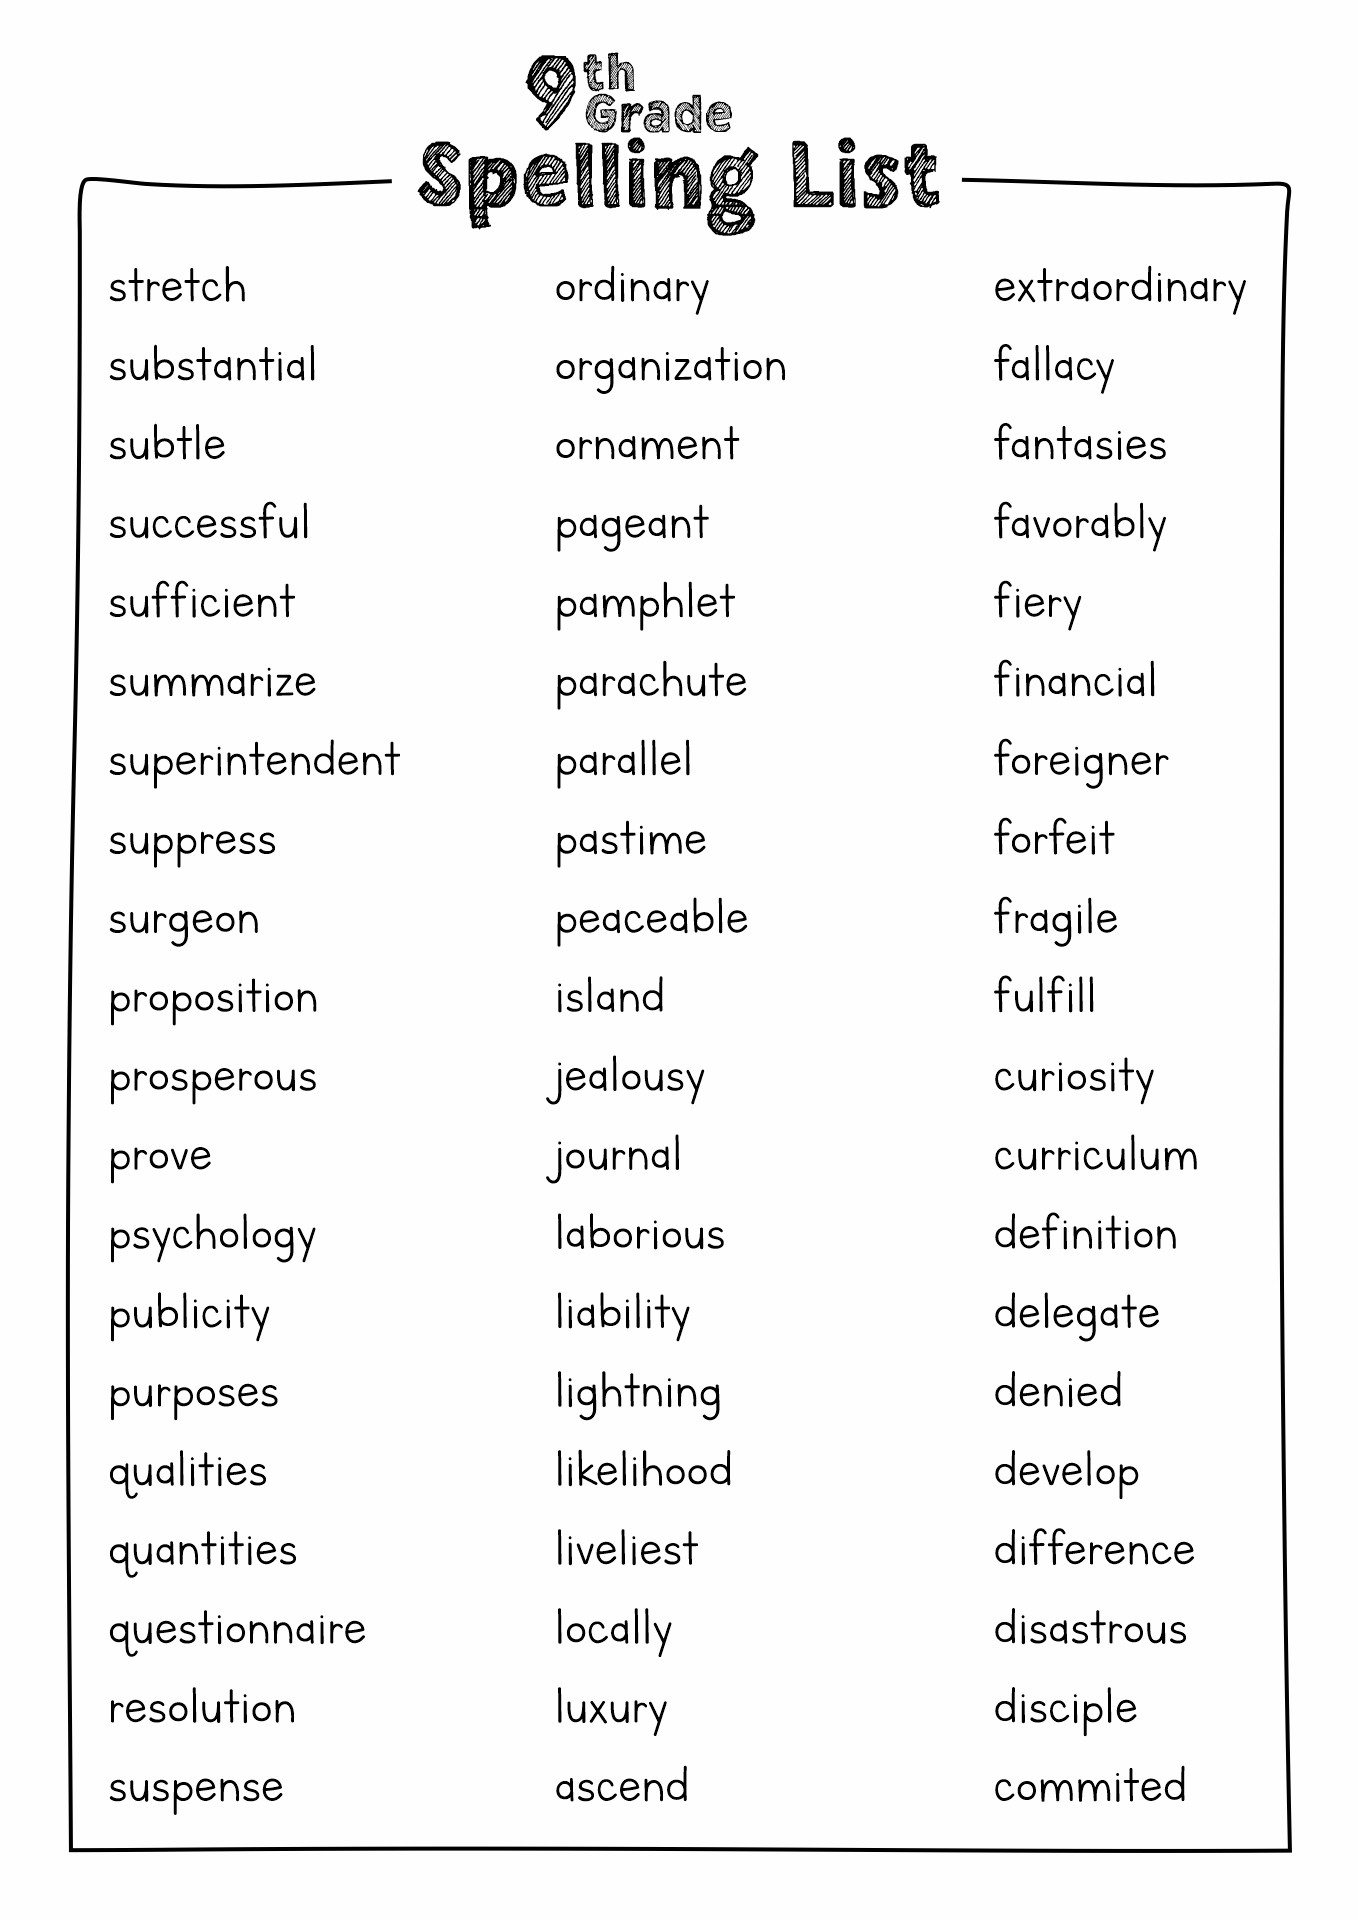 9th Grade Spelling Words Worksheets Image